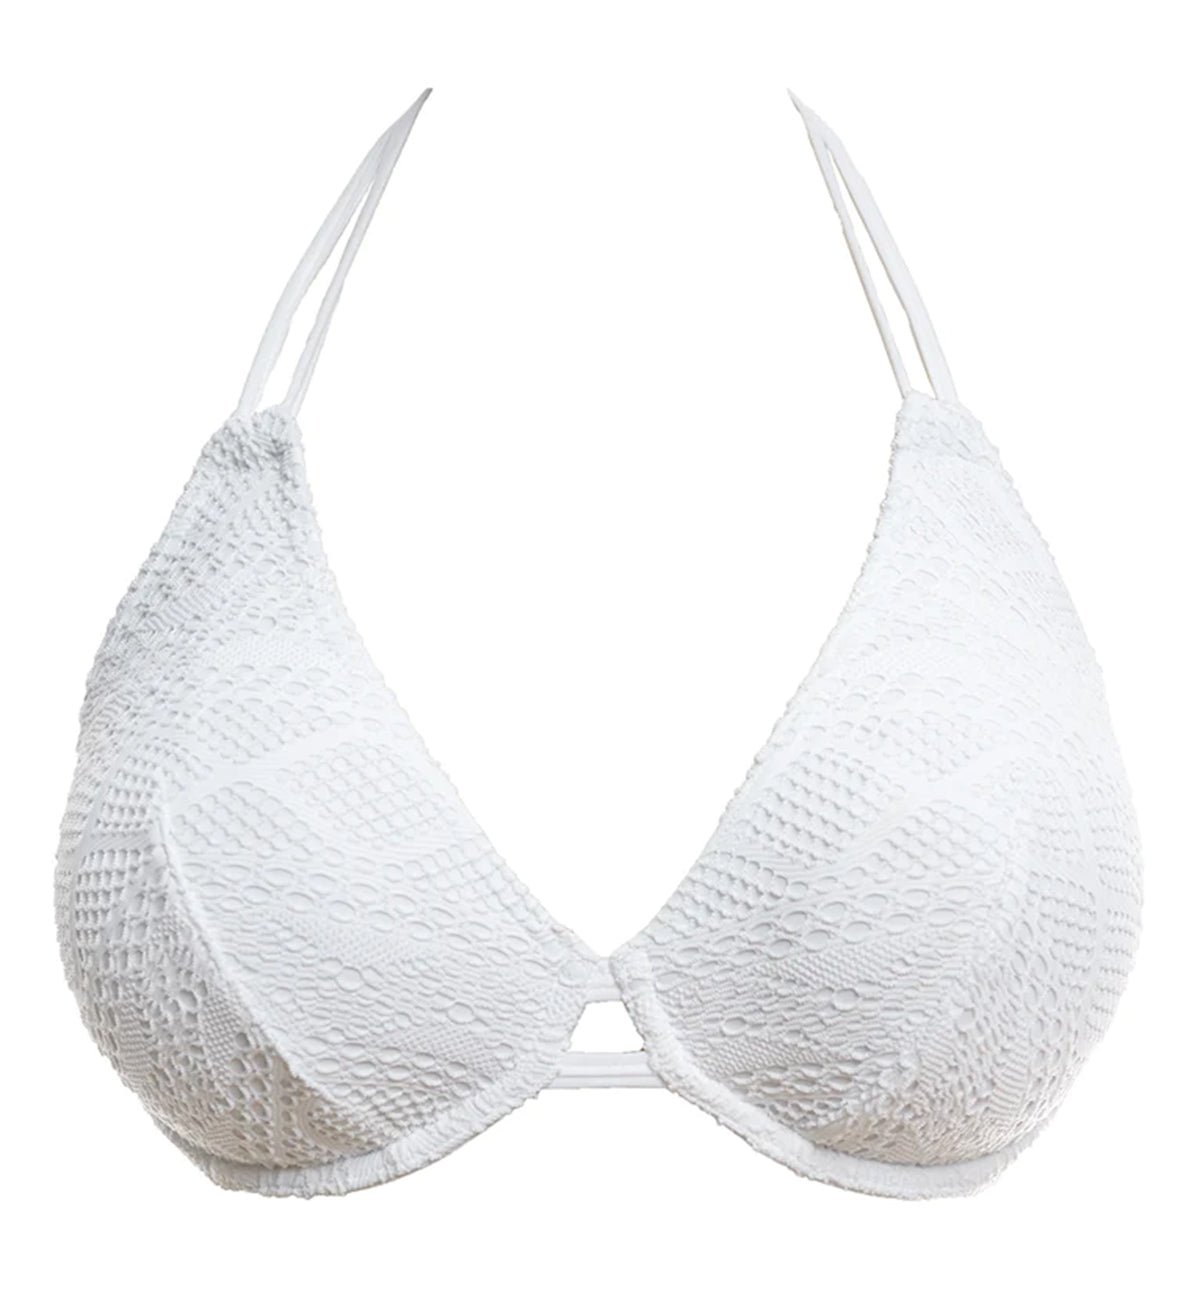 Freya Sundance Bandless Underwire Halter Bikini Top (3971),30D,White - White,30D